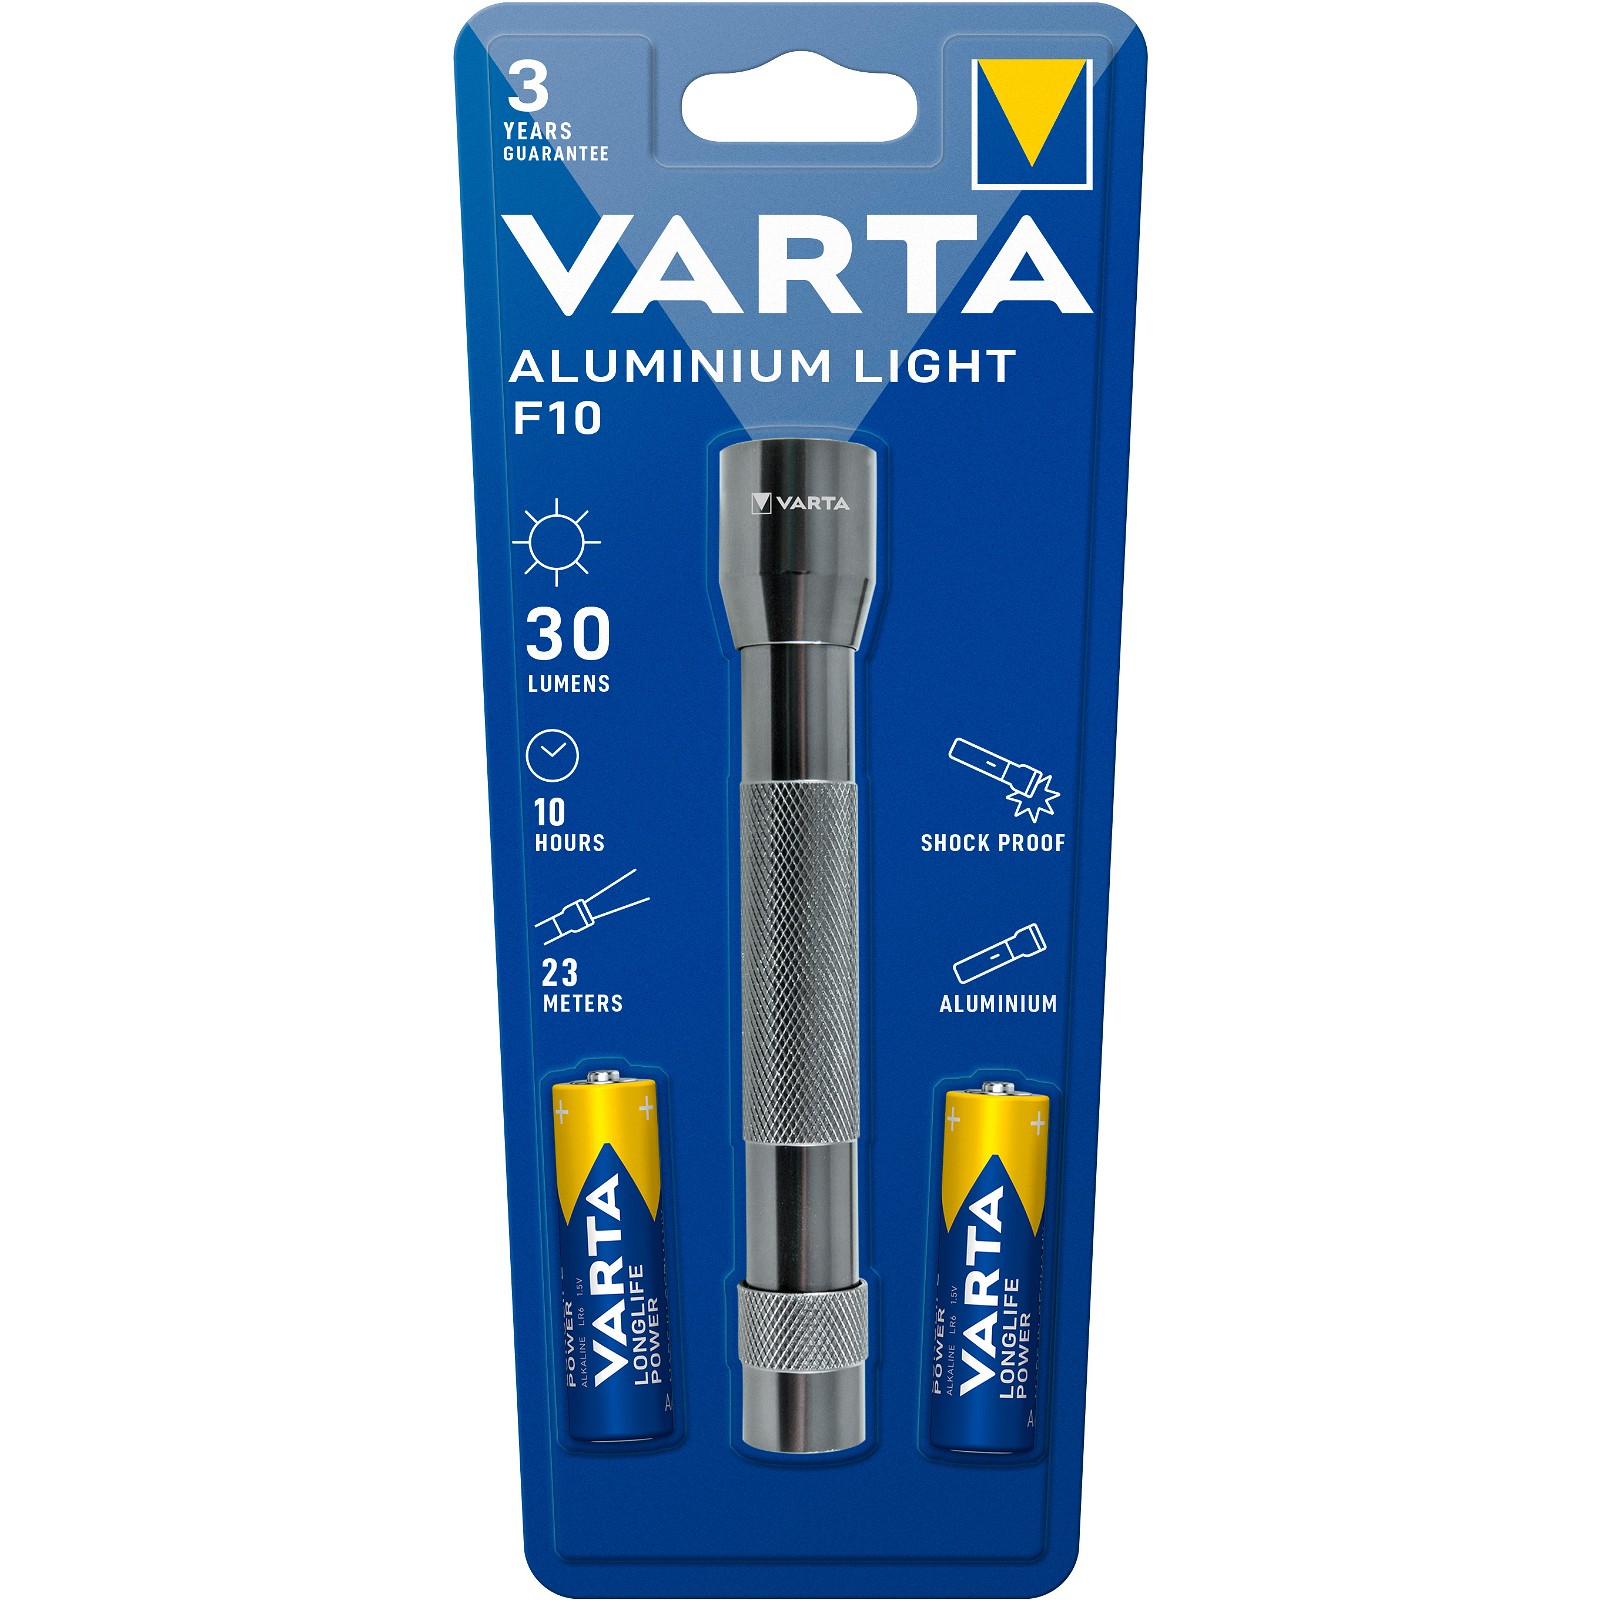 VARTA F10 lygte inkl. 2 x AA batterier